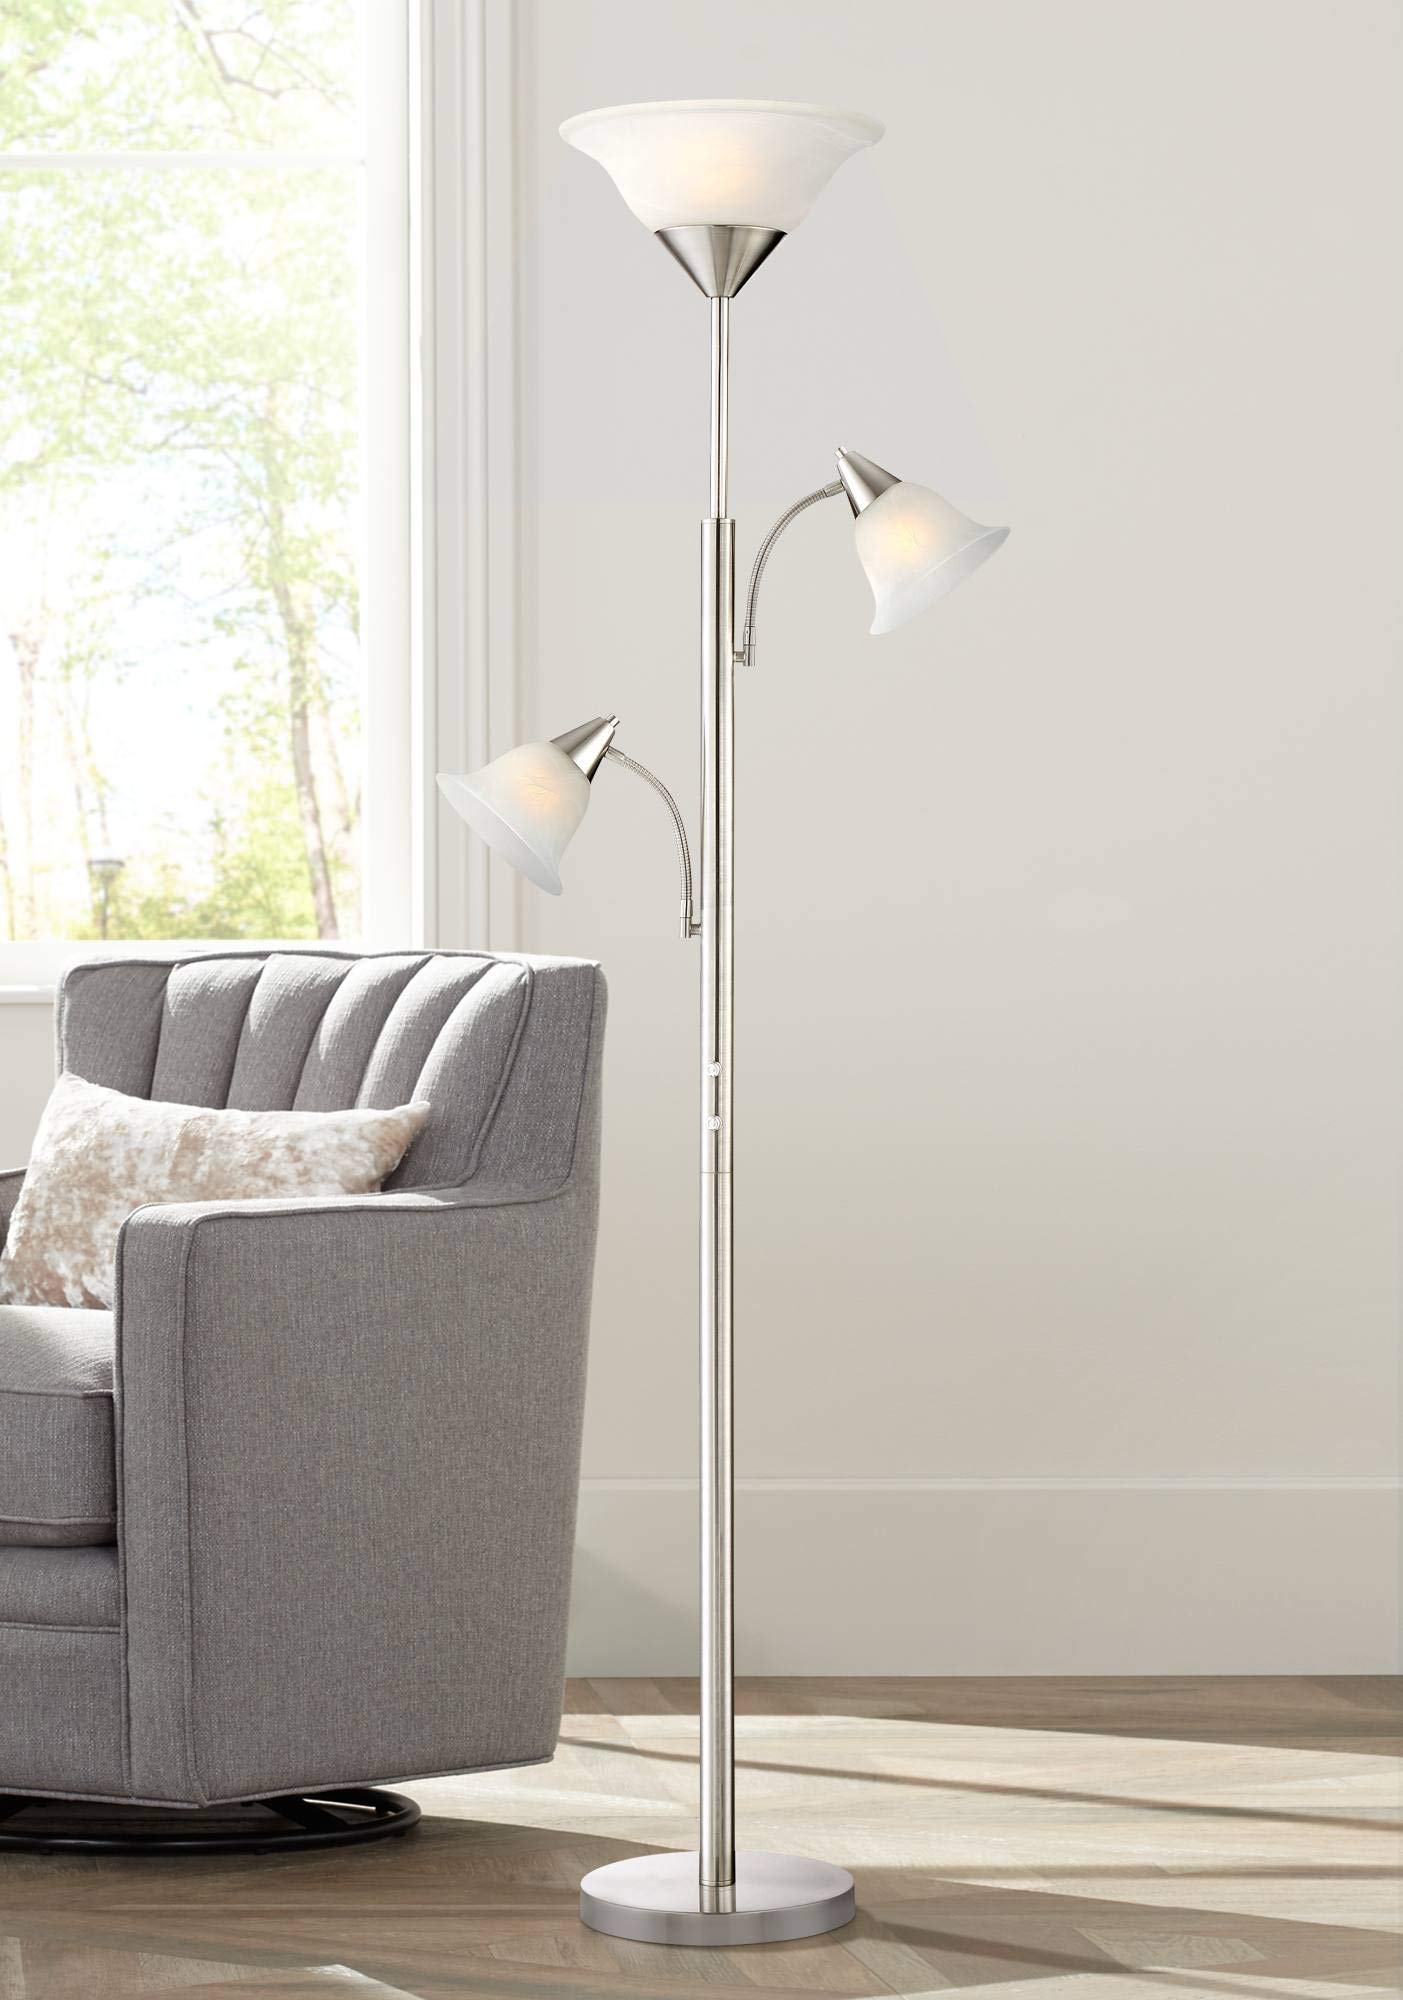 Jordan Modern Tree Torchiere Floor Lamp Standing 3-Light 71 1/2" Tall Brushed Nickel Silver Alabaster Glass Shades Decor for Living Room Readin...